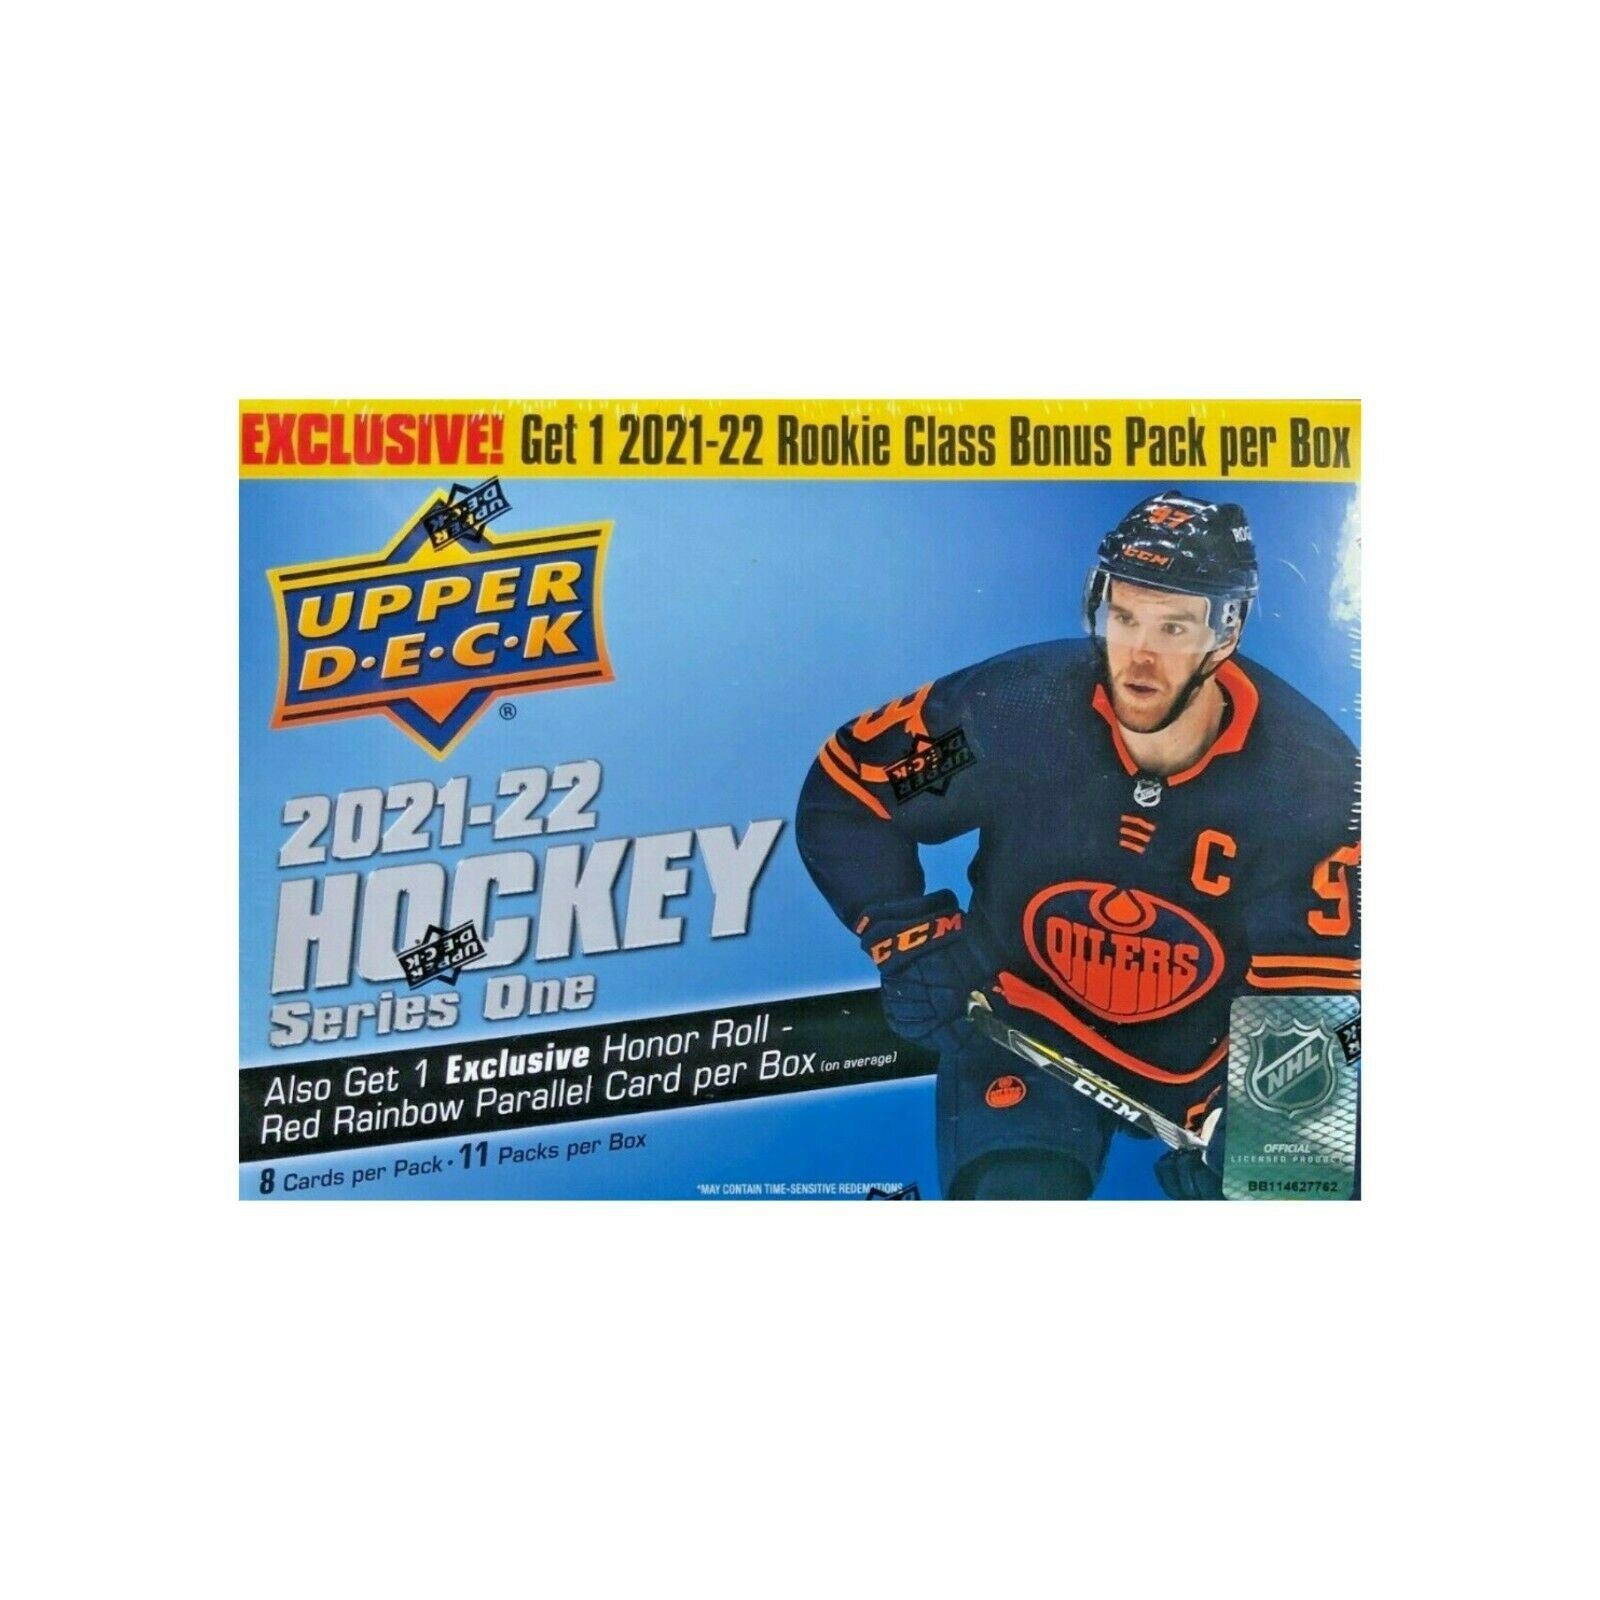 2021-22 Upper Deck SERIES 1 ONE Hockey NHL Mega Box 88 Cards plus BONUS PACK